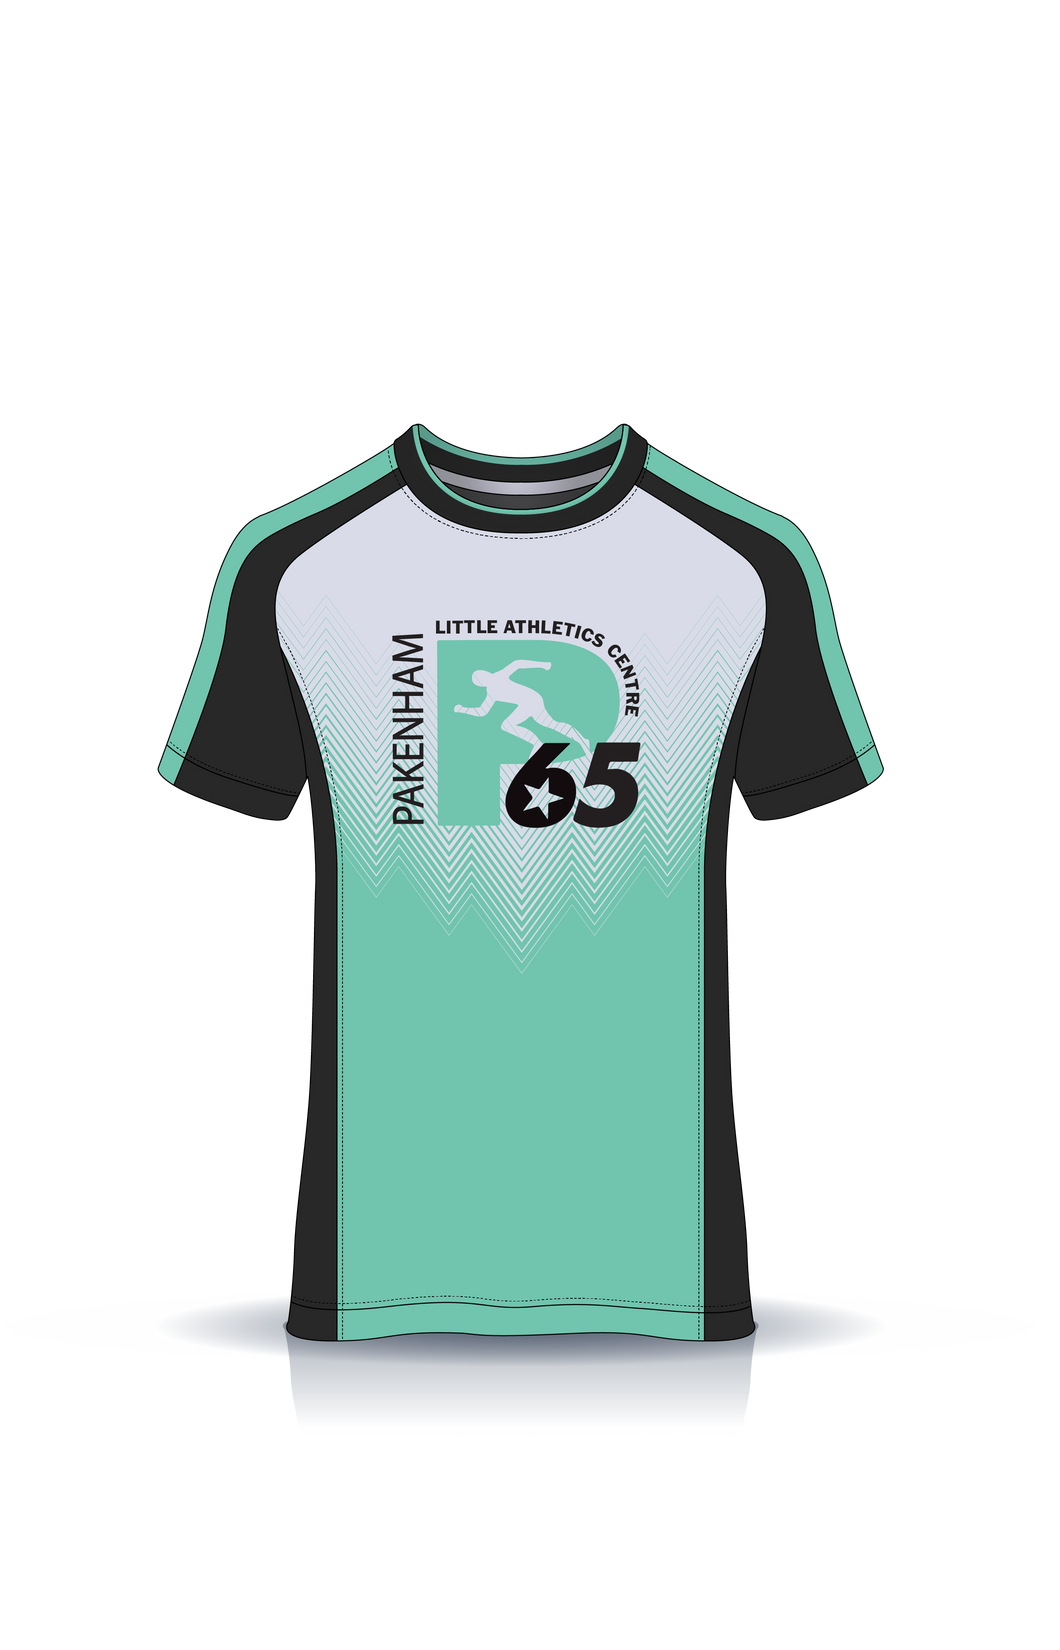 Pakenham Little Athletics Club training tee Shirt - OPTIONAL CUSTOM NAME